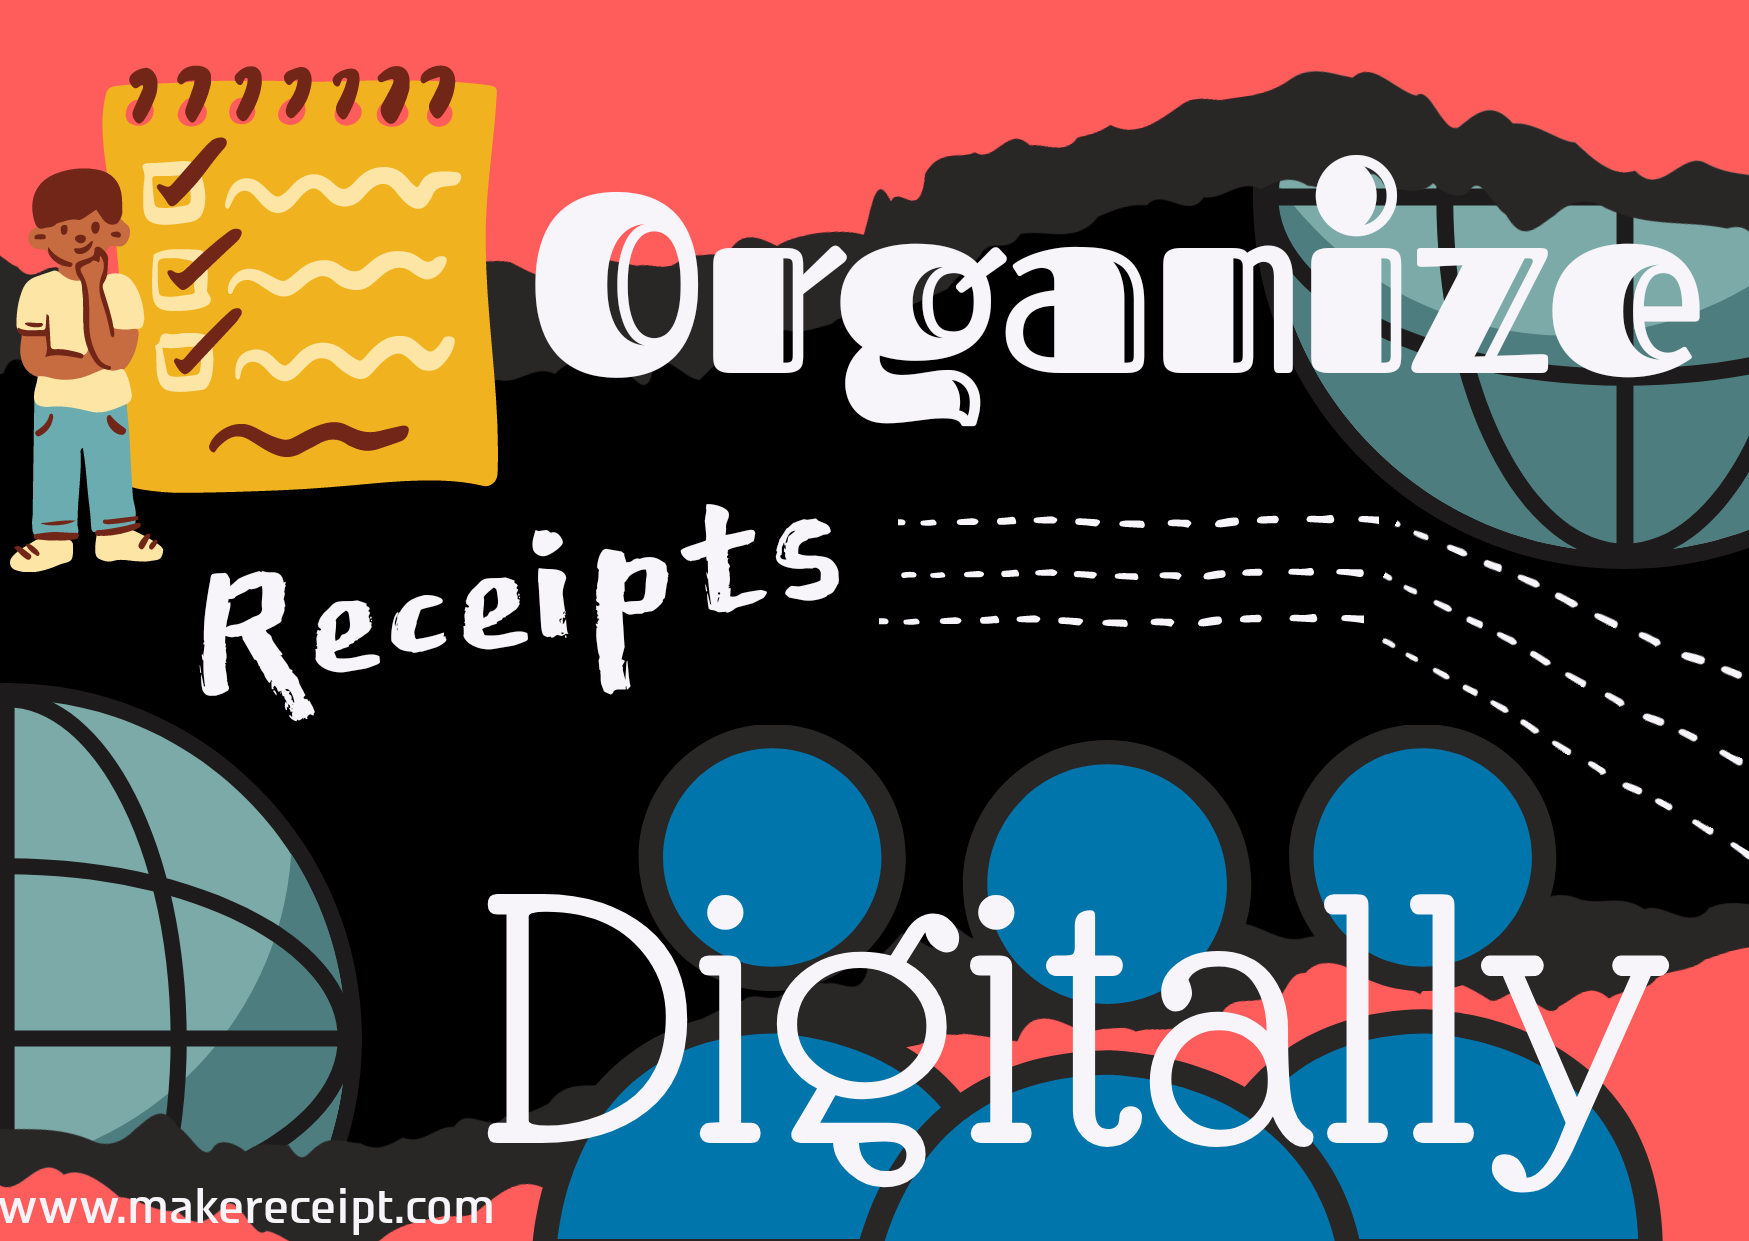 Organize Receipts Digitally